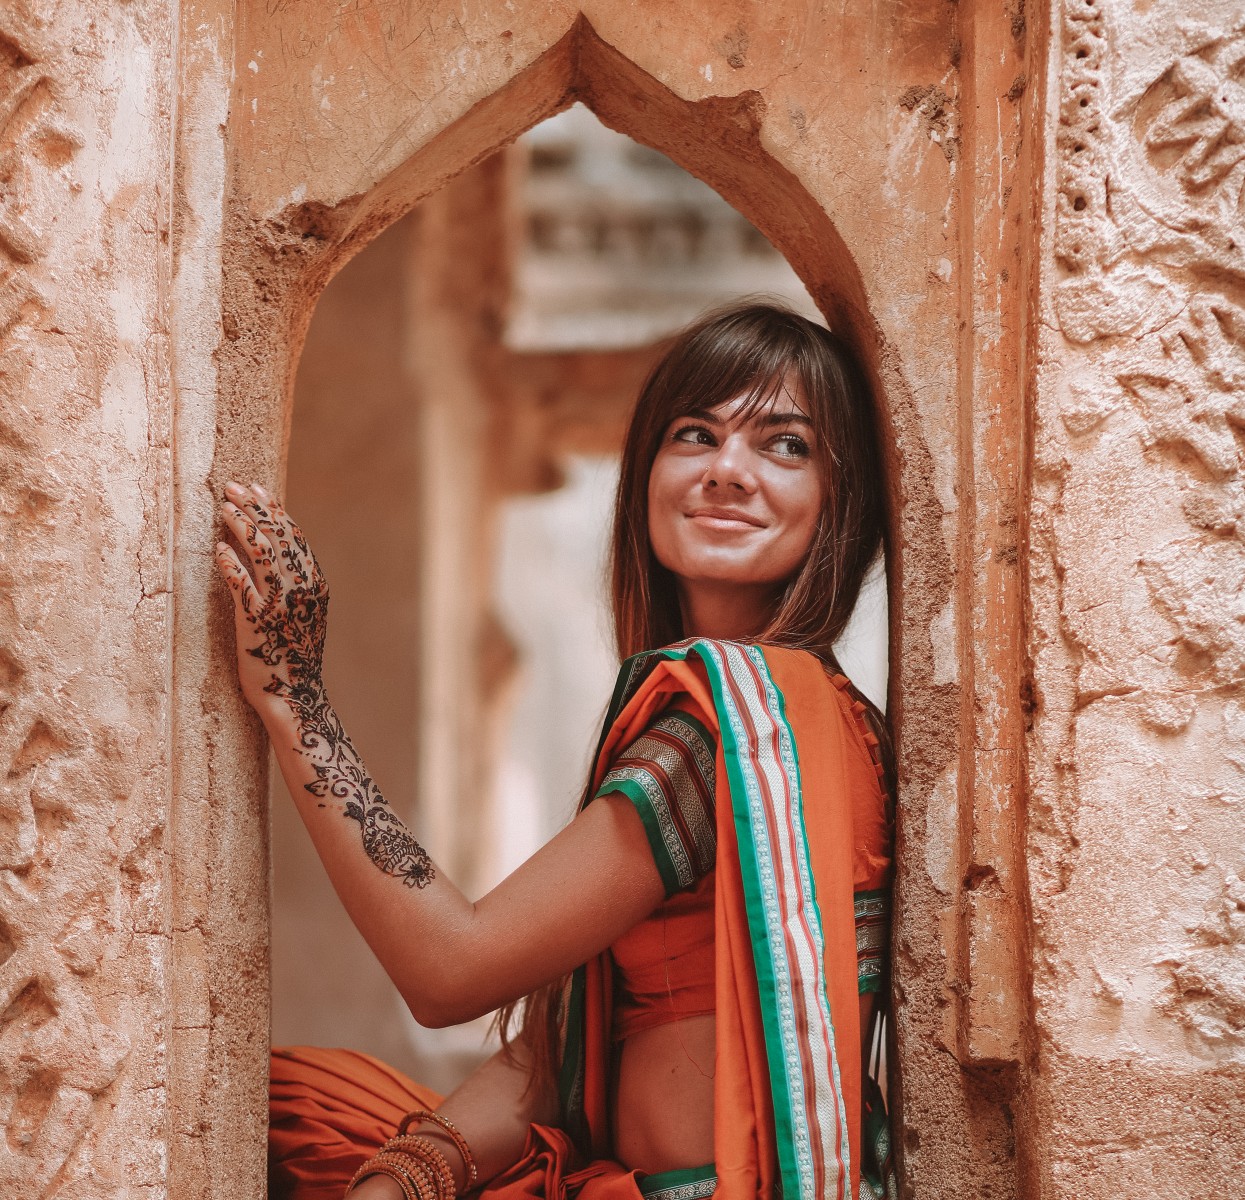 A girl wearing a traditional Indian sari